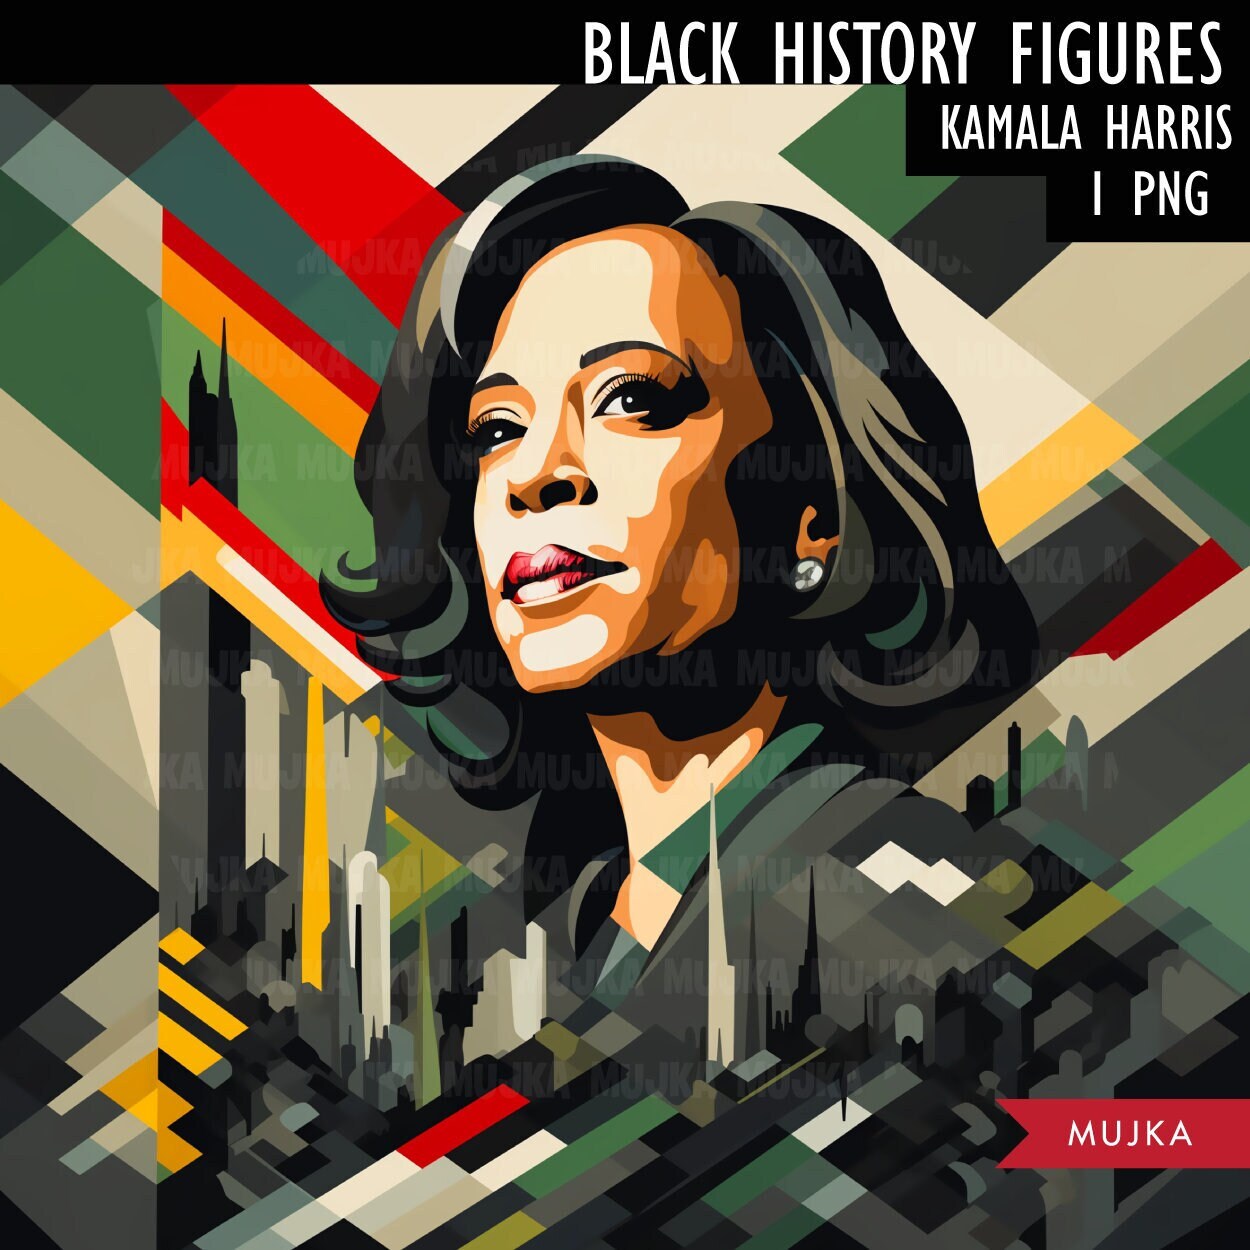 Black History PNG, Kamala Harris poster, Black History Cards, printable Black History Art, Black History wall art, sublimation design